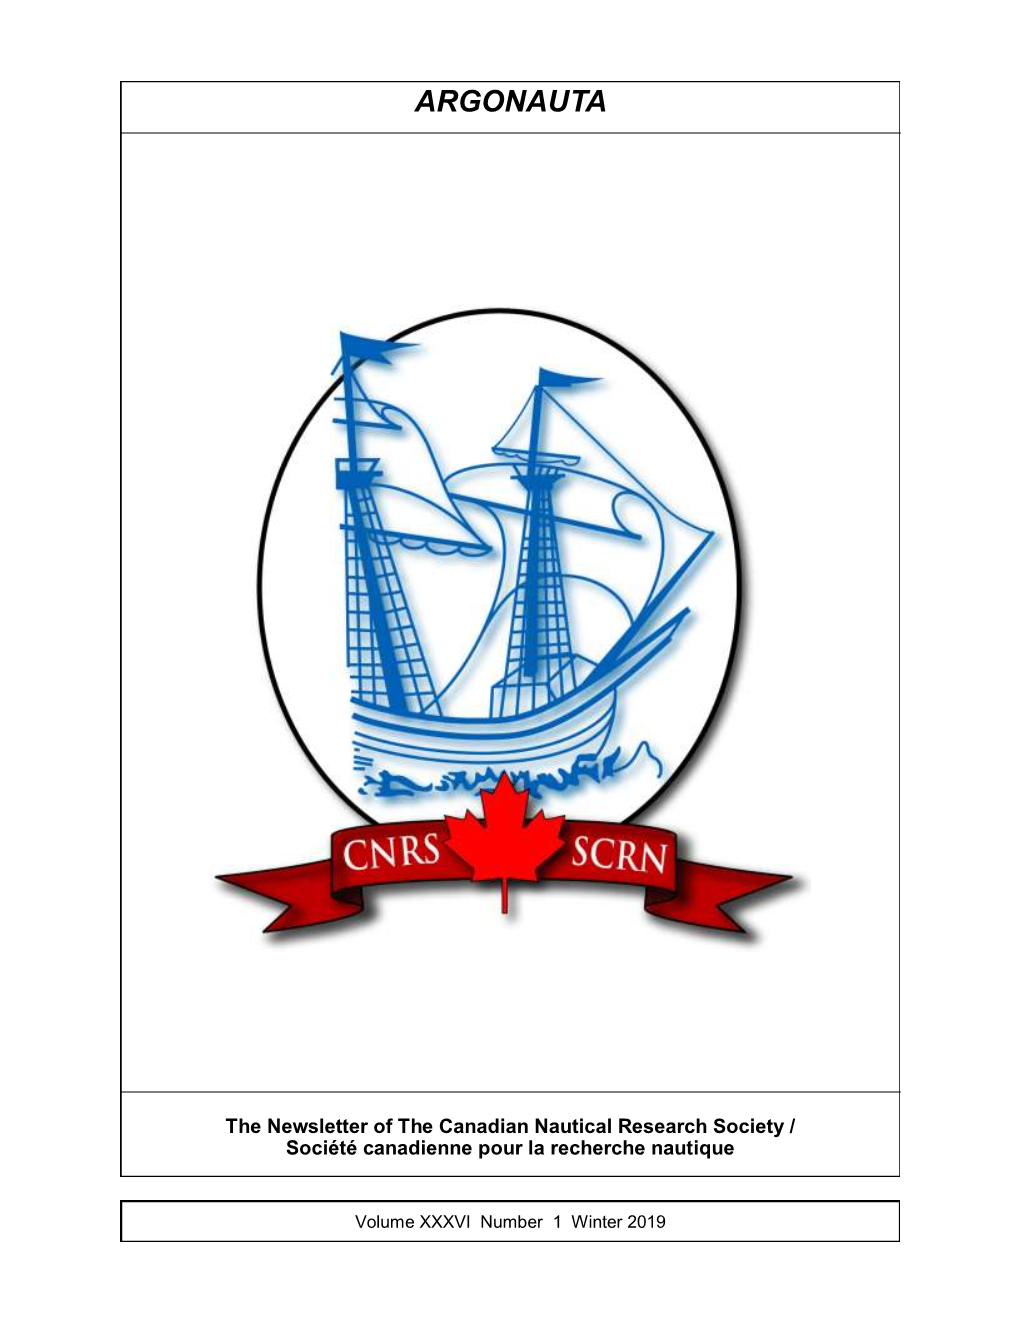 The Halifax Graving Dock Article by Tom Tulloch, CNRS Argonauta